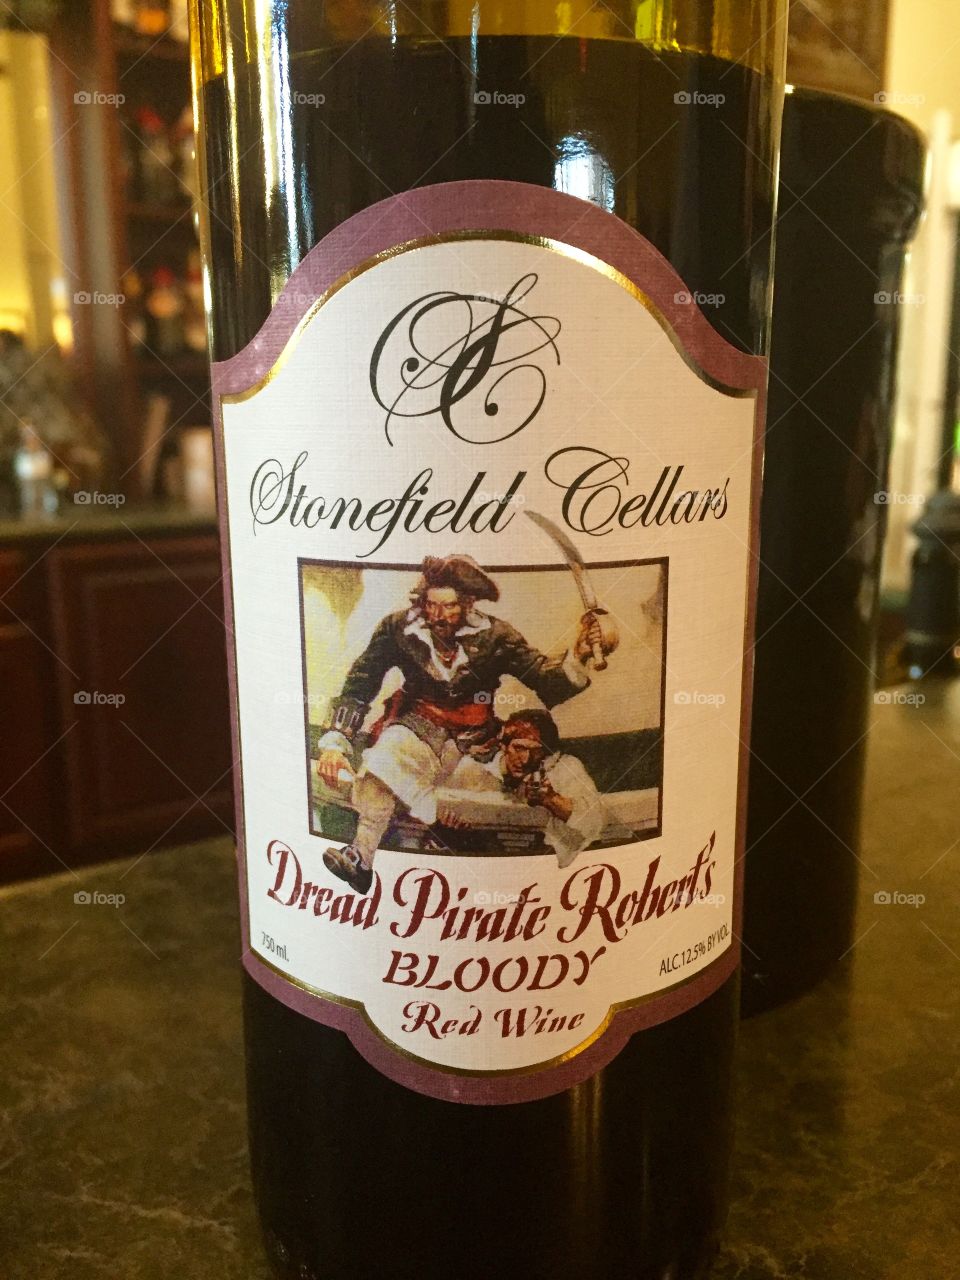 Dread Pirate Roberts Wine